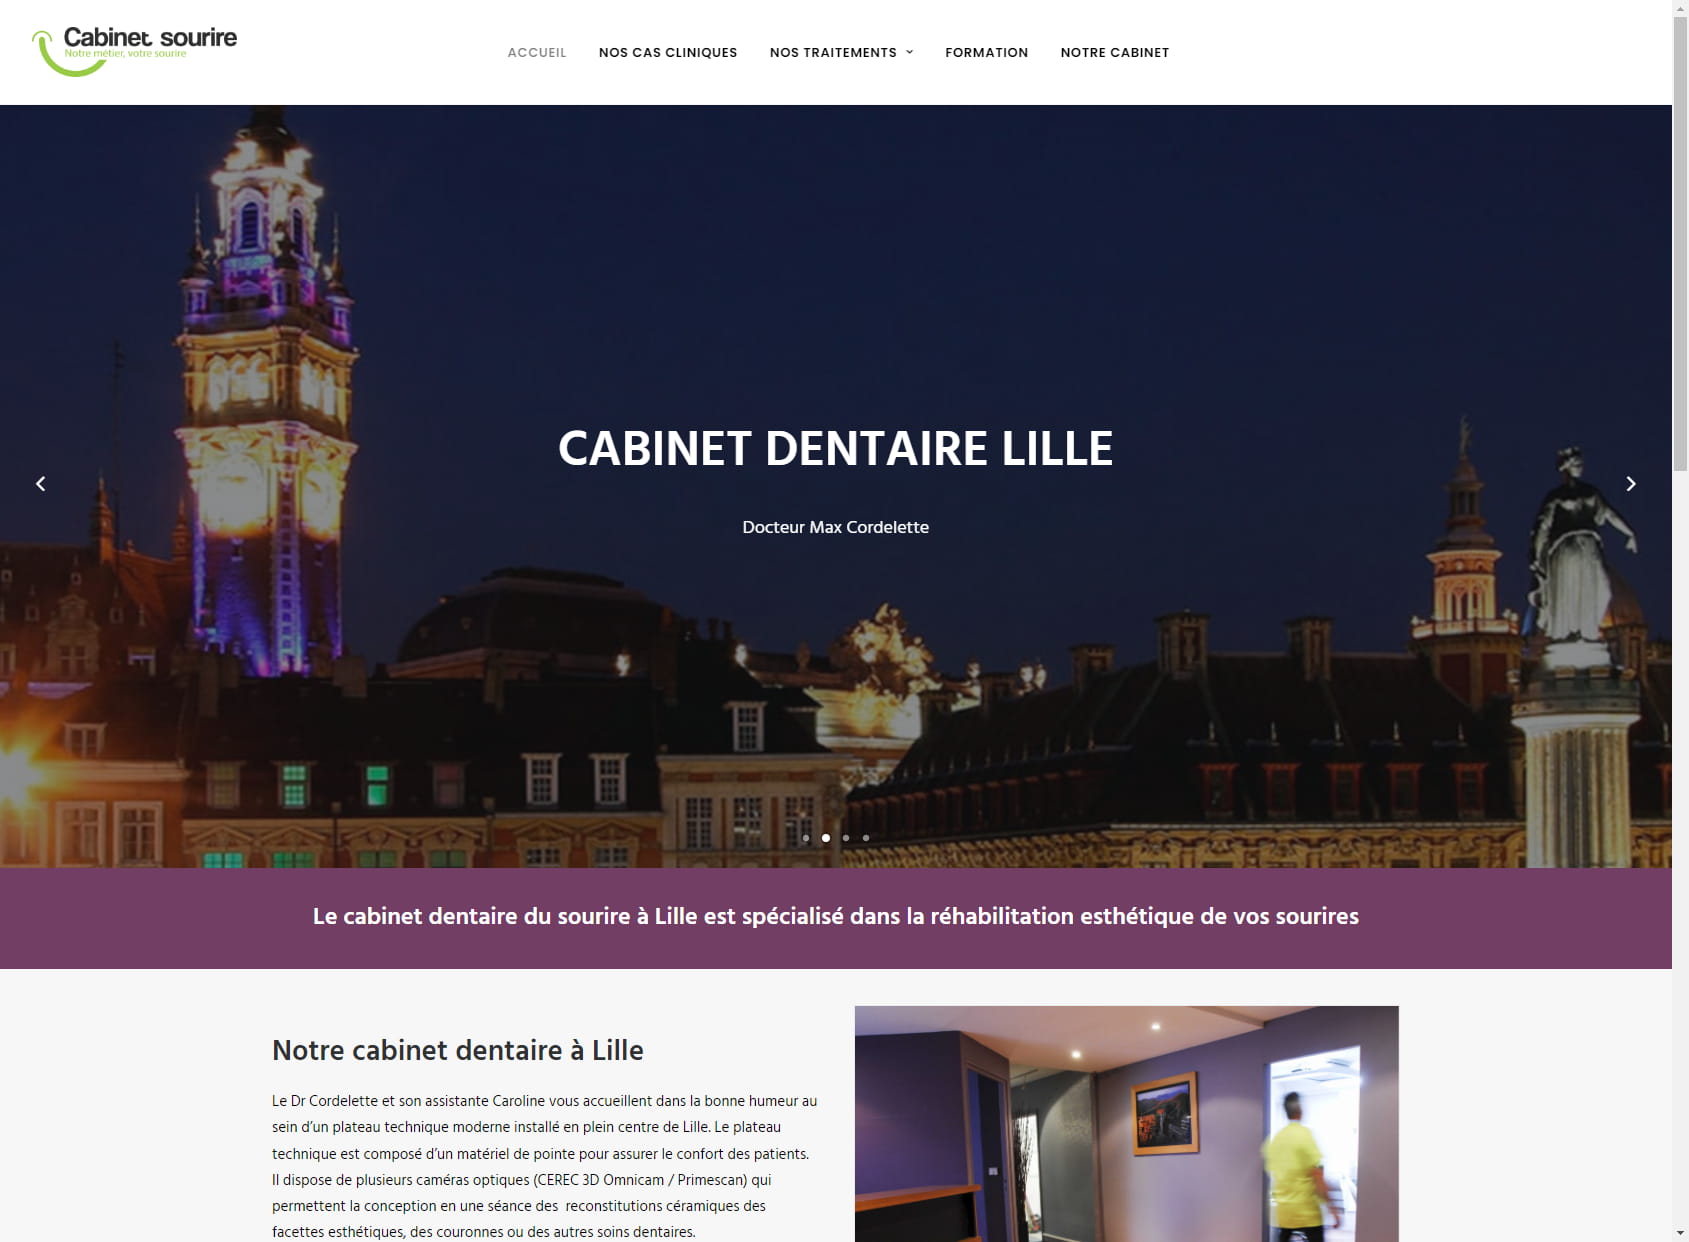 Cabinet Dentaire du Sourire - Max Cordelette